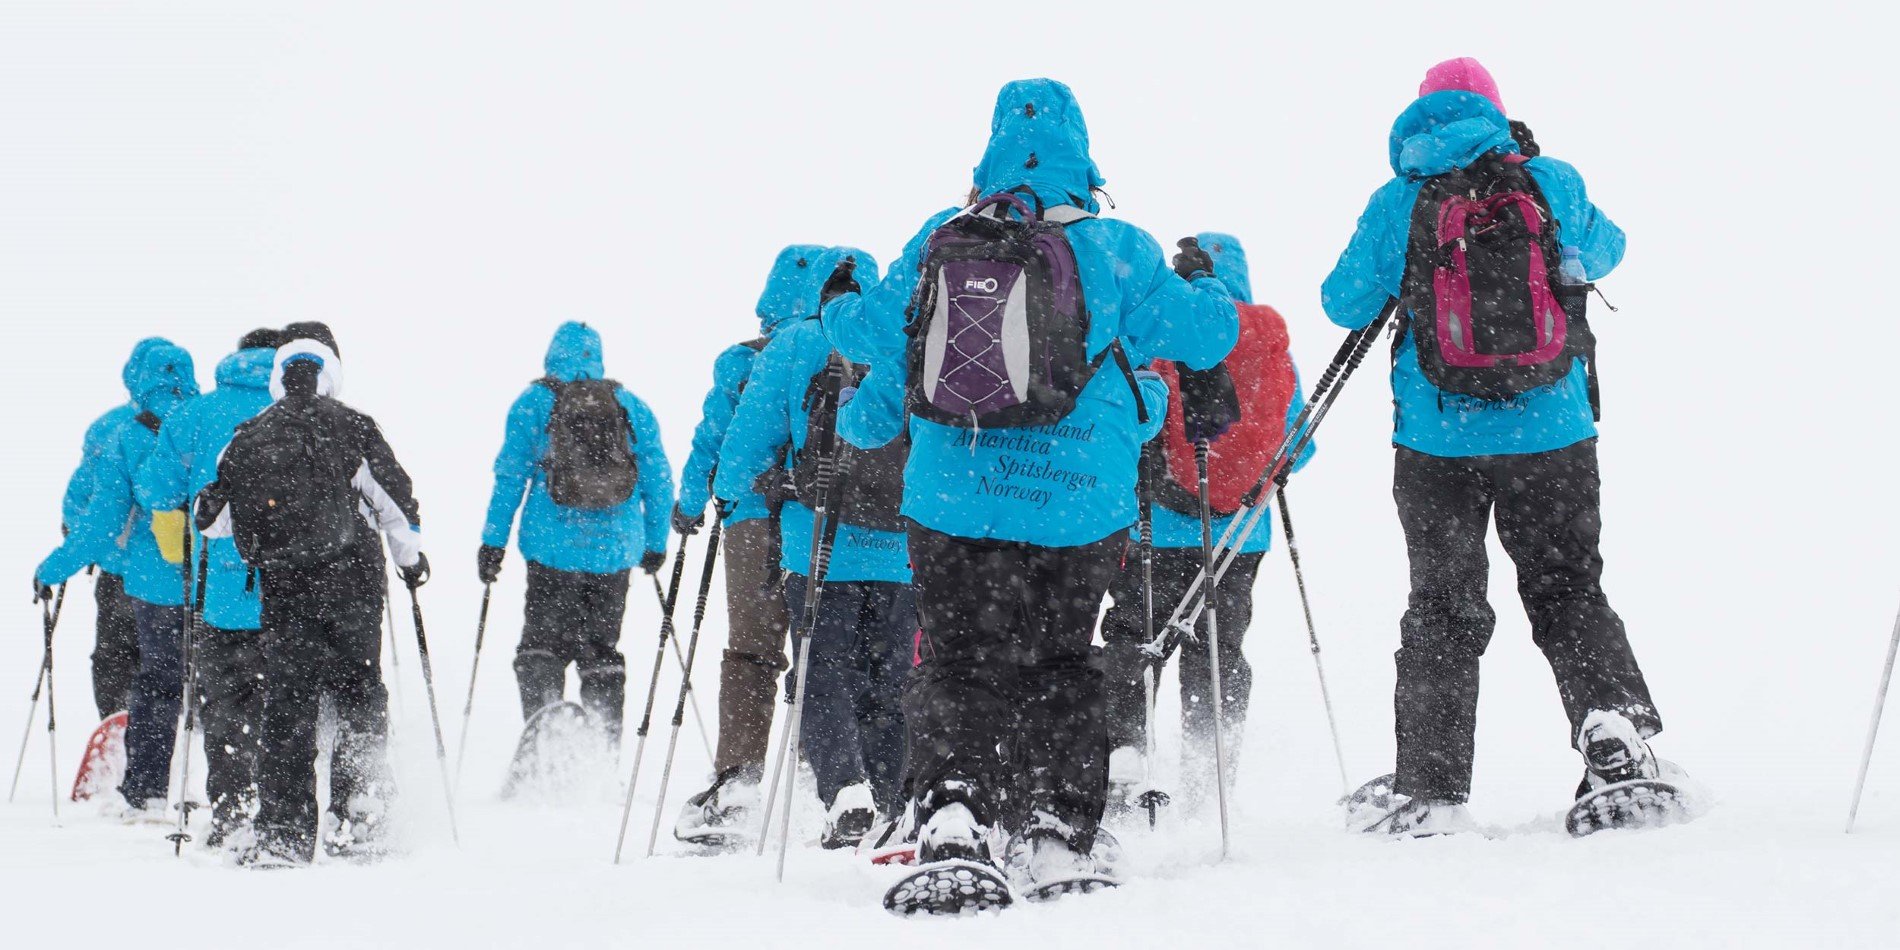 Group of tourists snow shoeing through drift snow